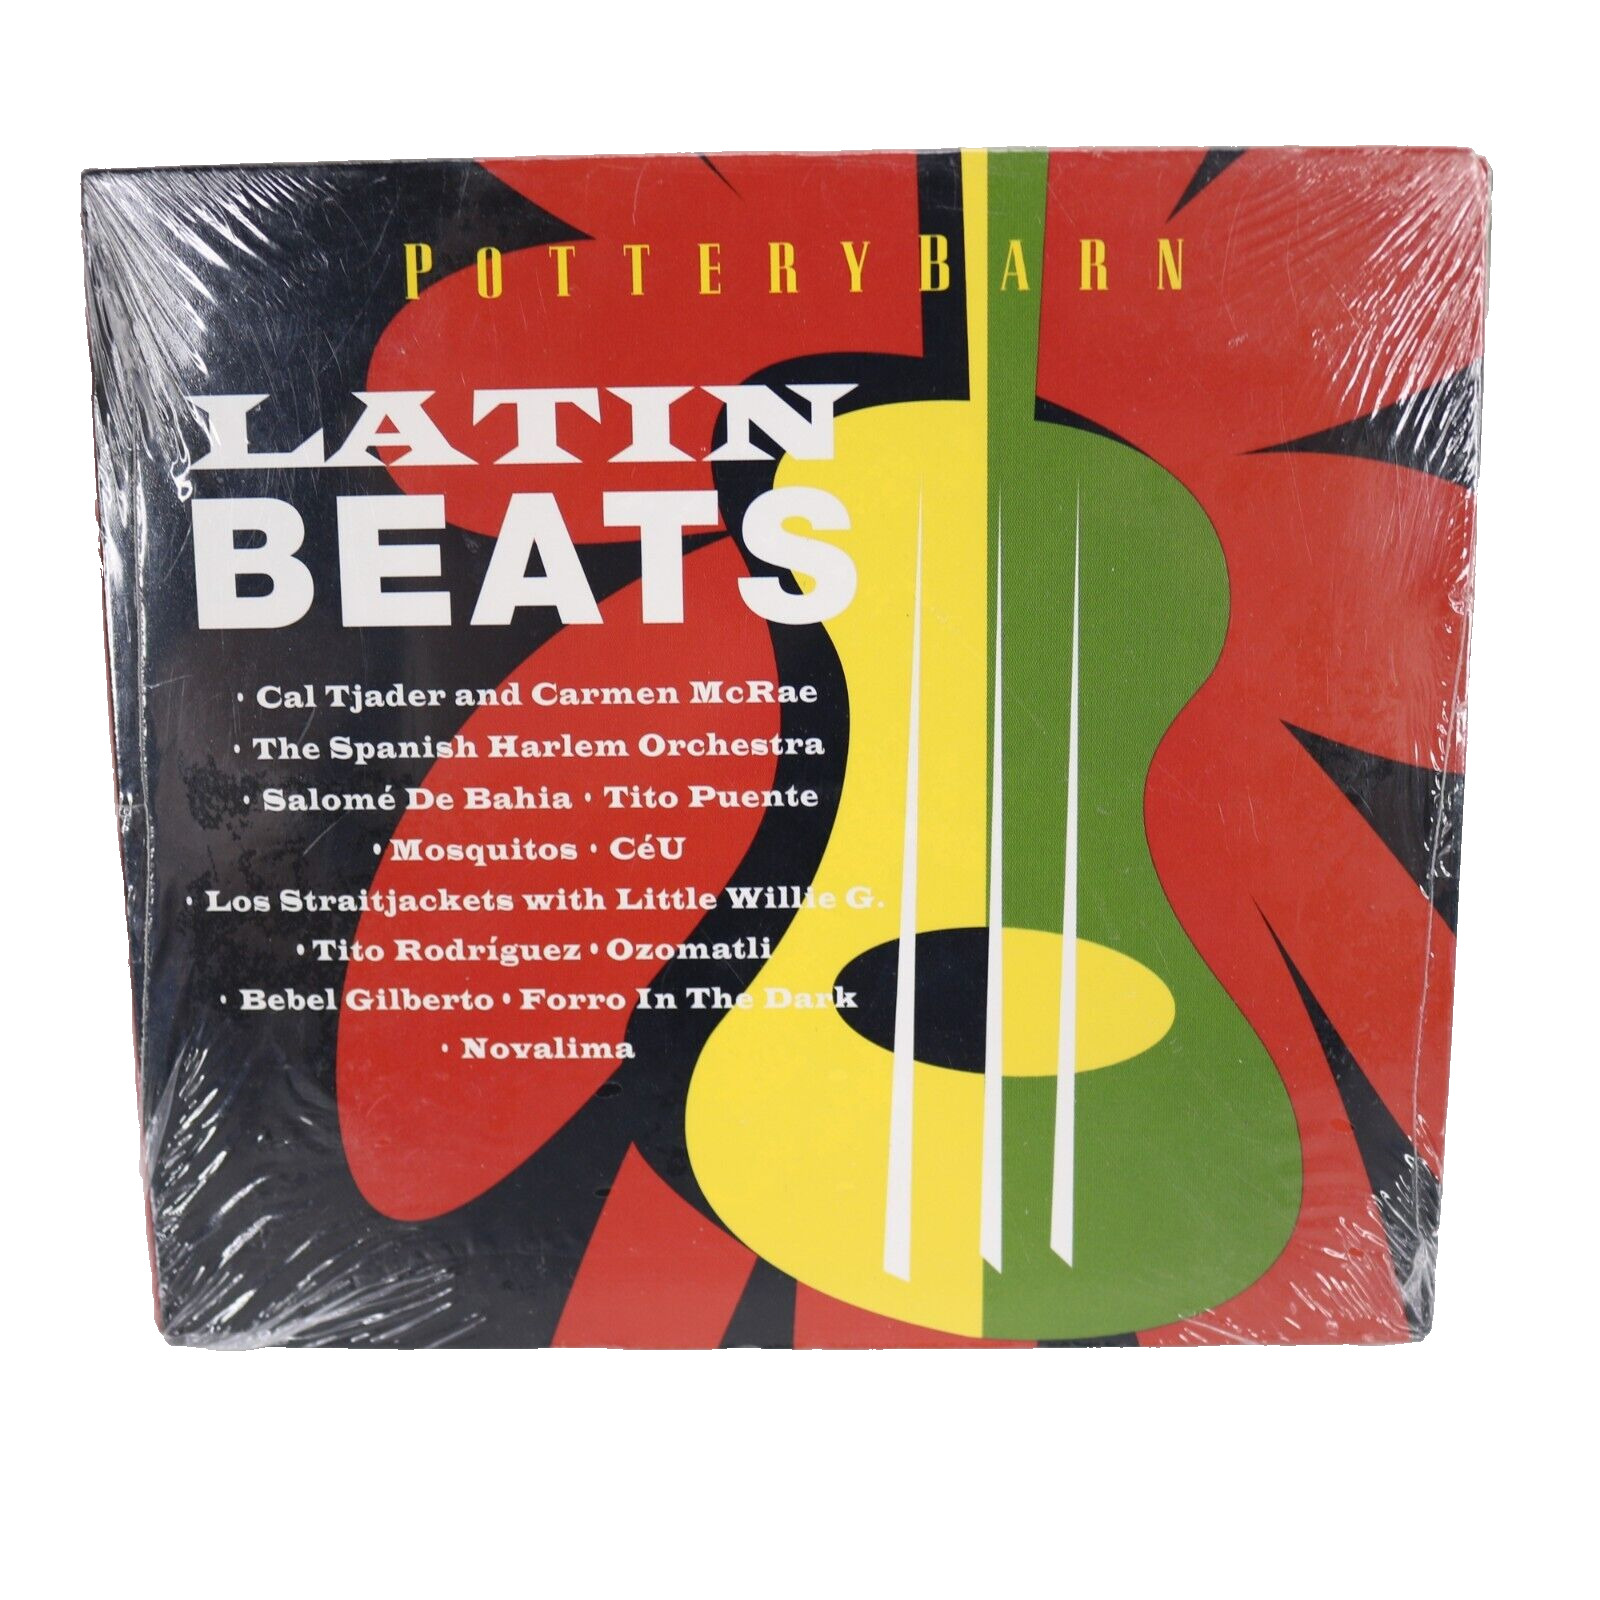 Pottery Barn Latin Beats CD * NEW Sealed * 2007 Digipak * 12 Songs on Album